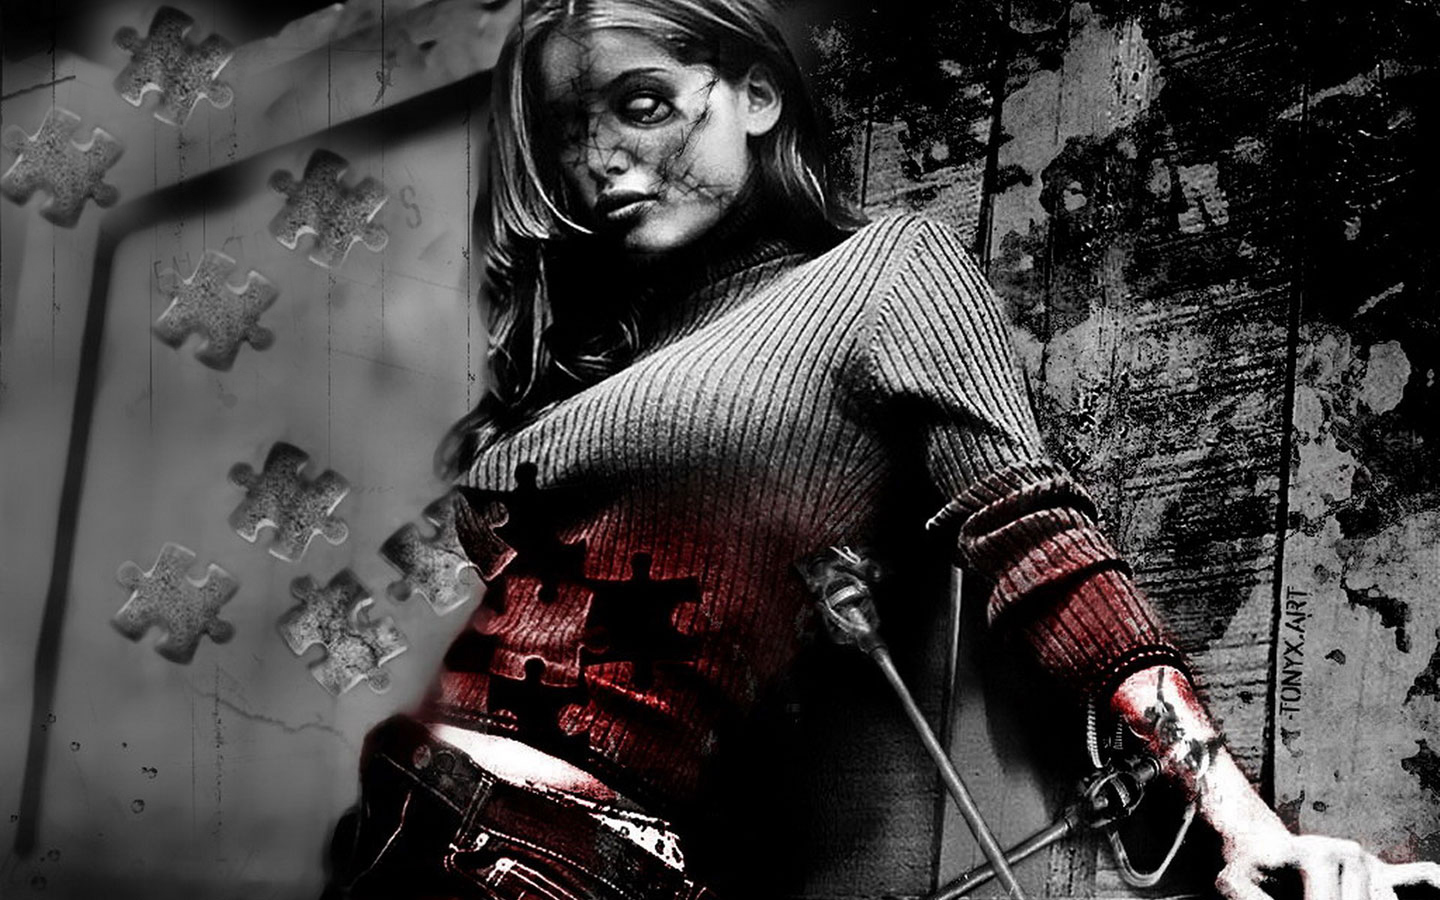  download Zombie girl hd desktop wallpaper HD Wallpaper 1440x900